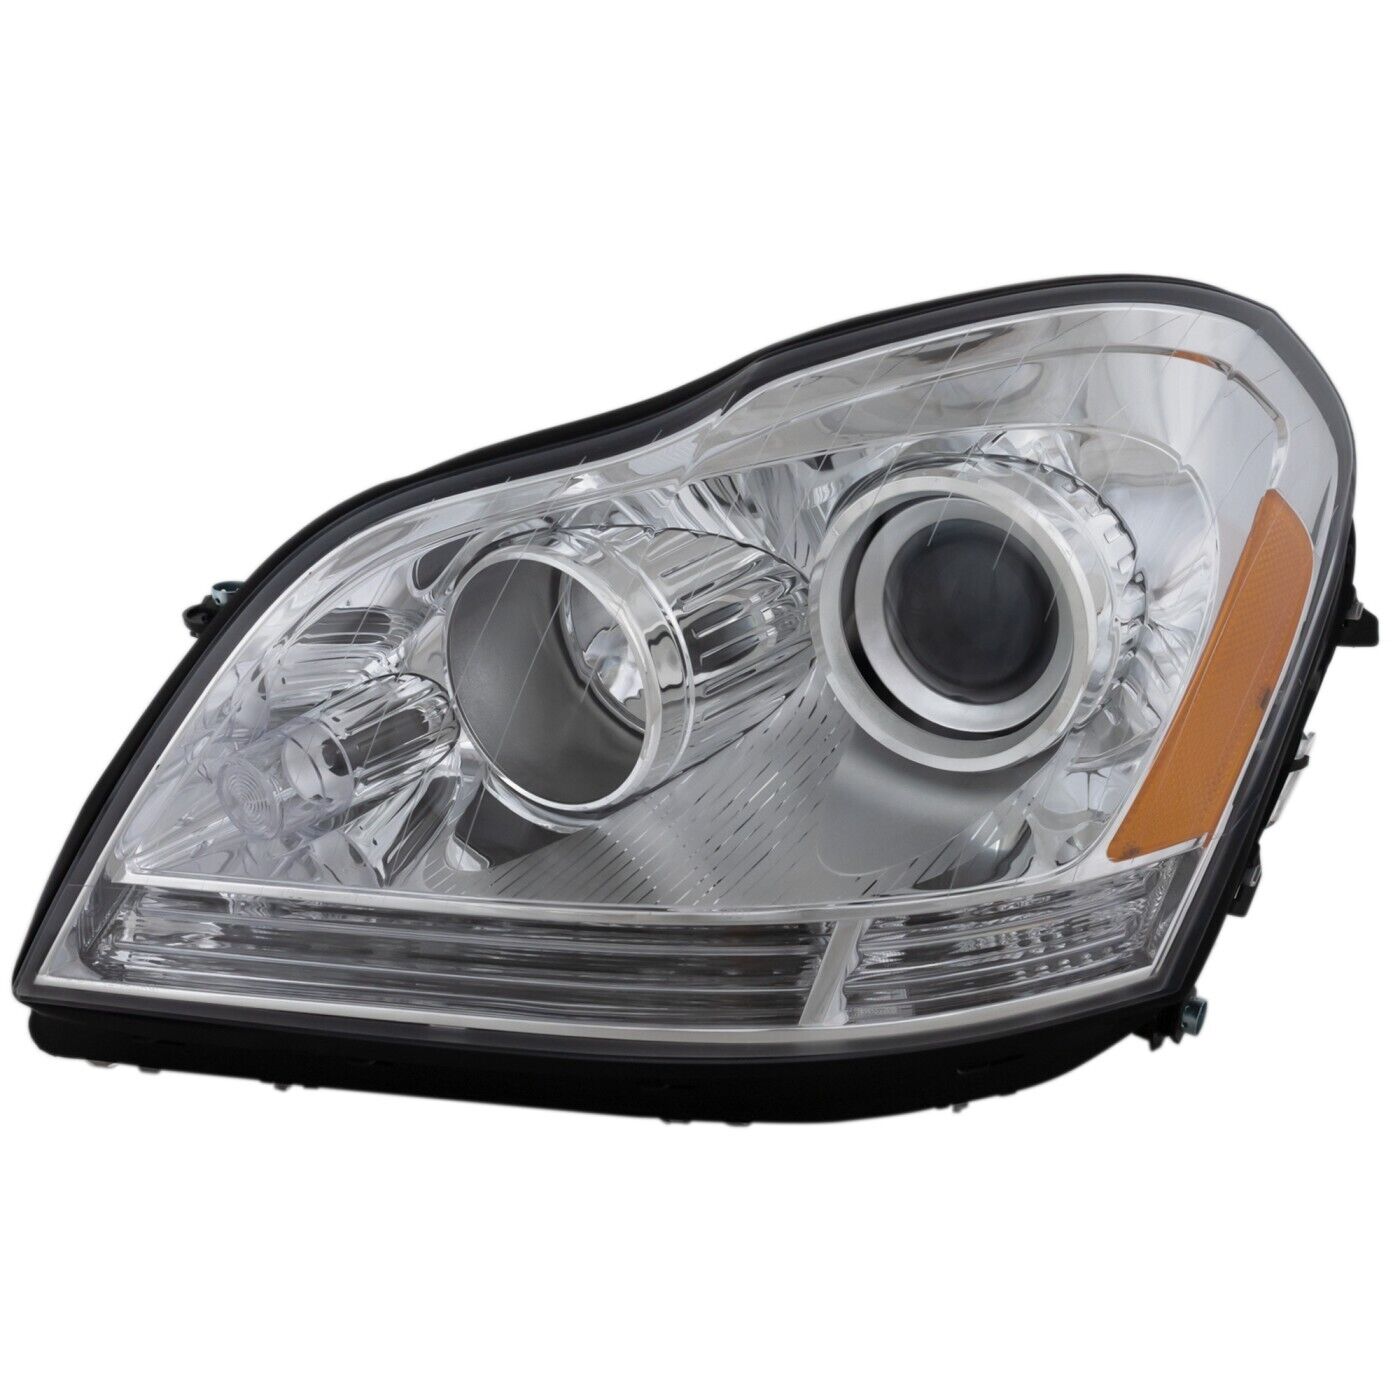 Halogen Headlight Lamp Assembly LH LF Driver Side for GL320 GL350 GL450 GL550